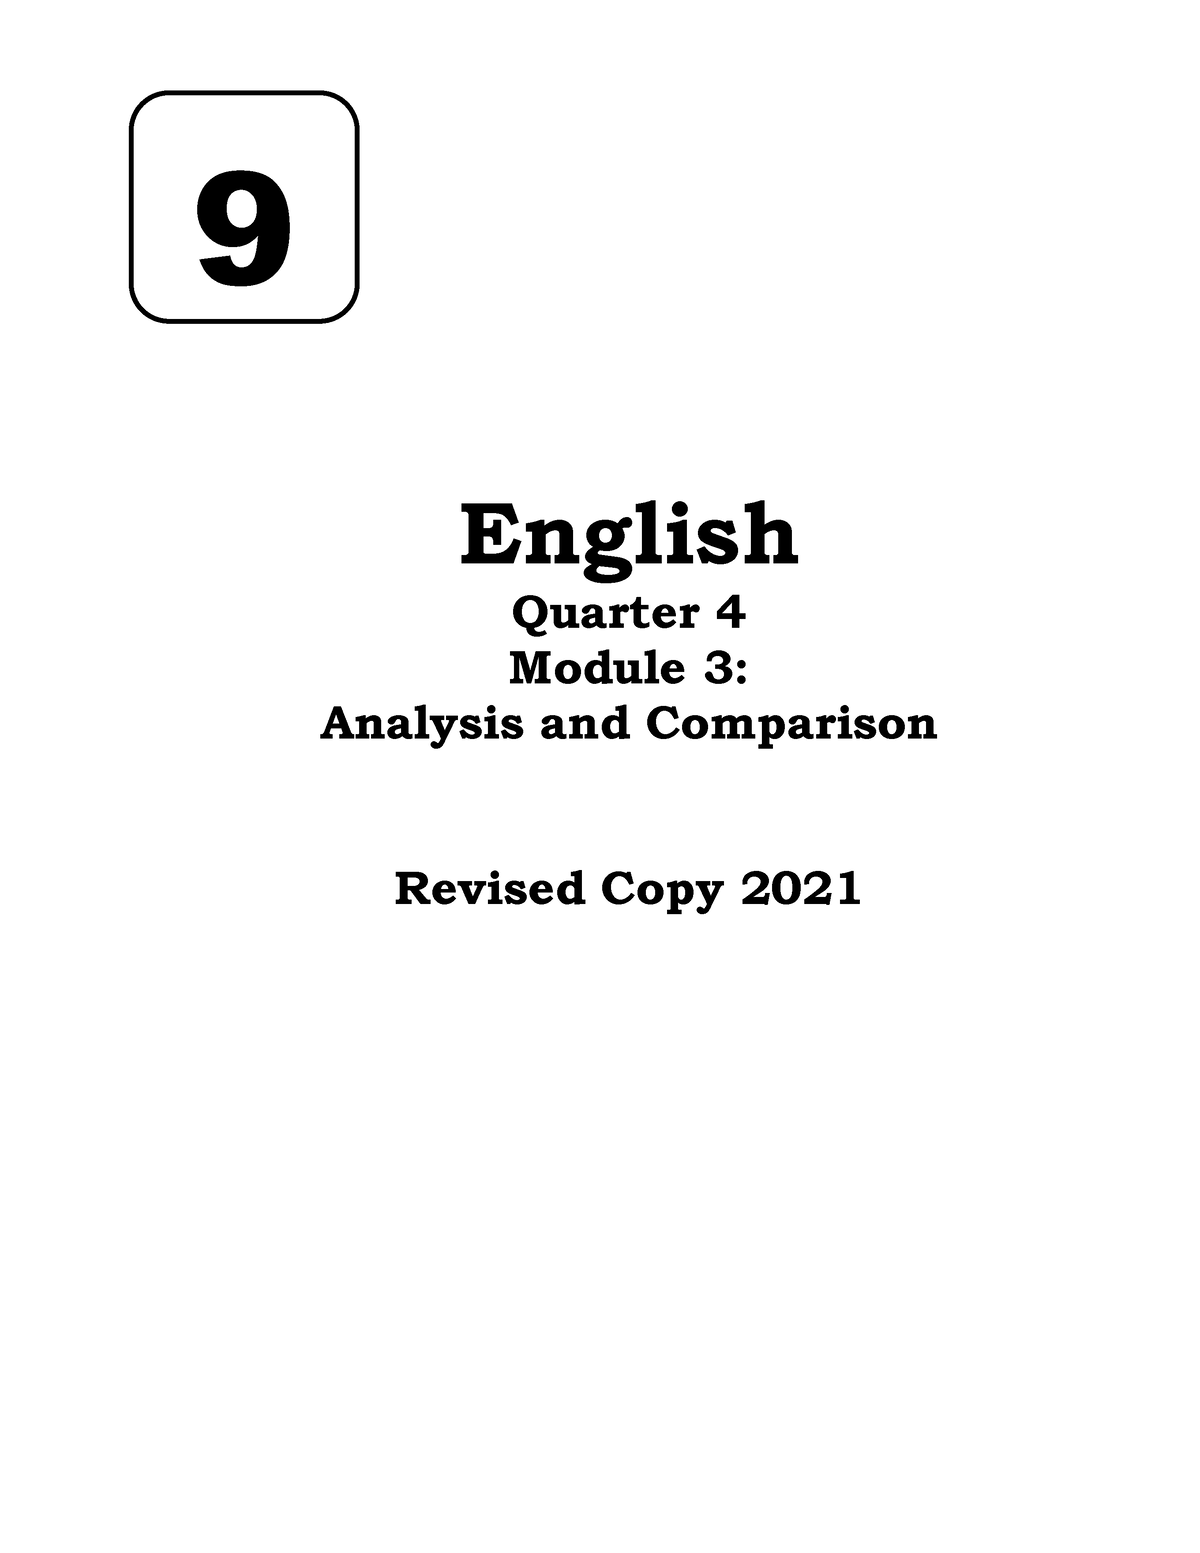 3 Q4 English English Quarter 4 Module 3 Analysis And Comparison Revised Copy 2021 9 9383